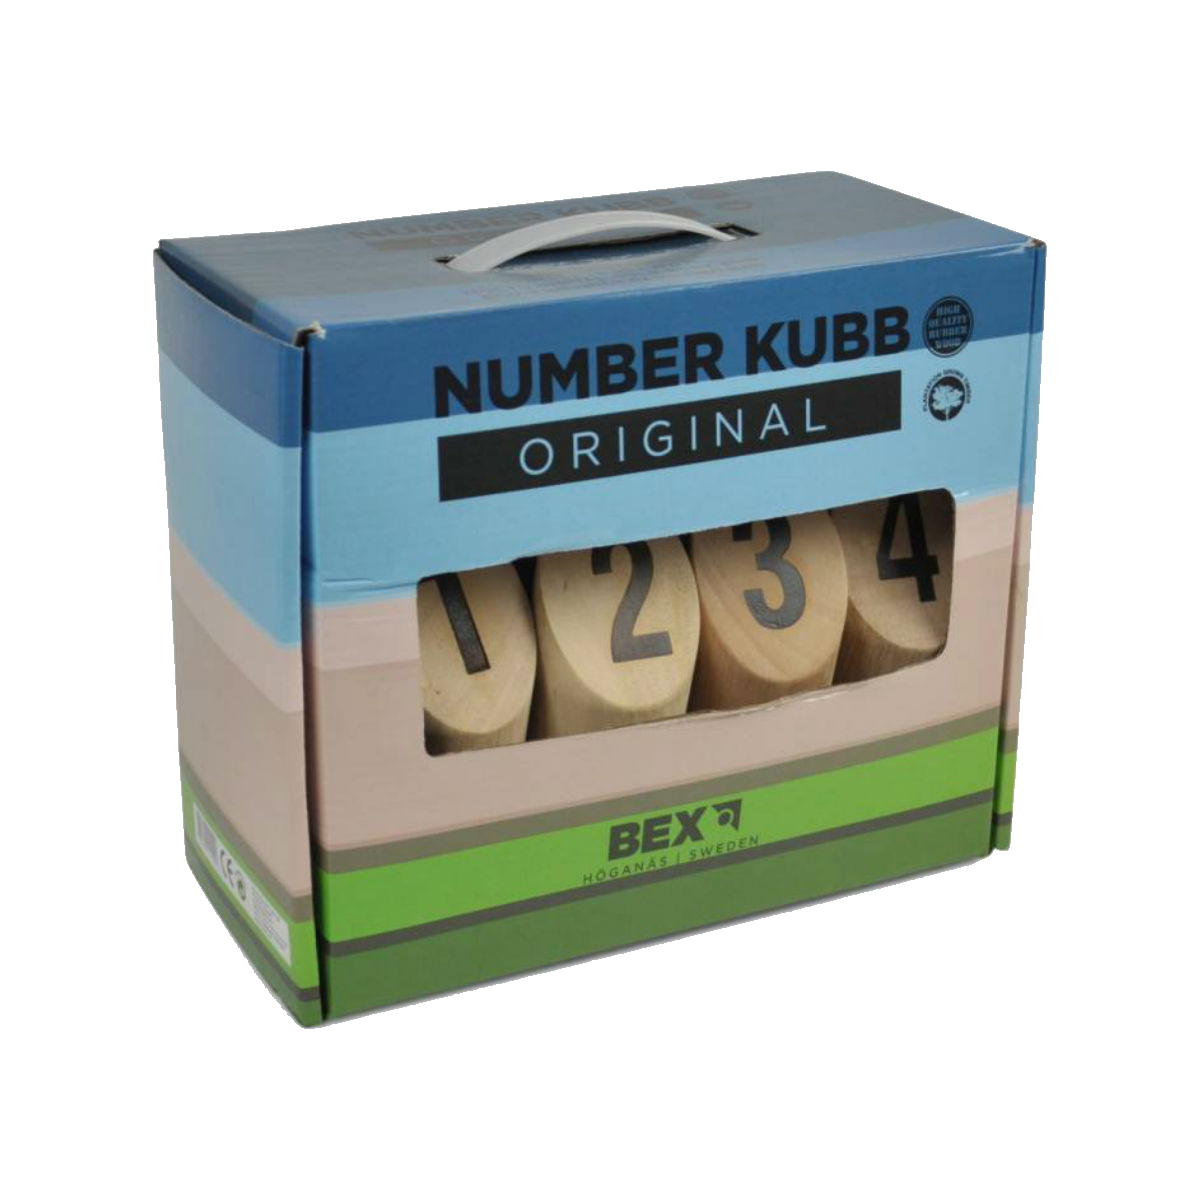 Number Kubb